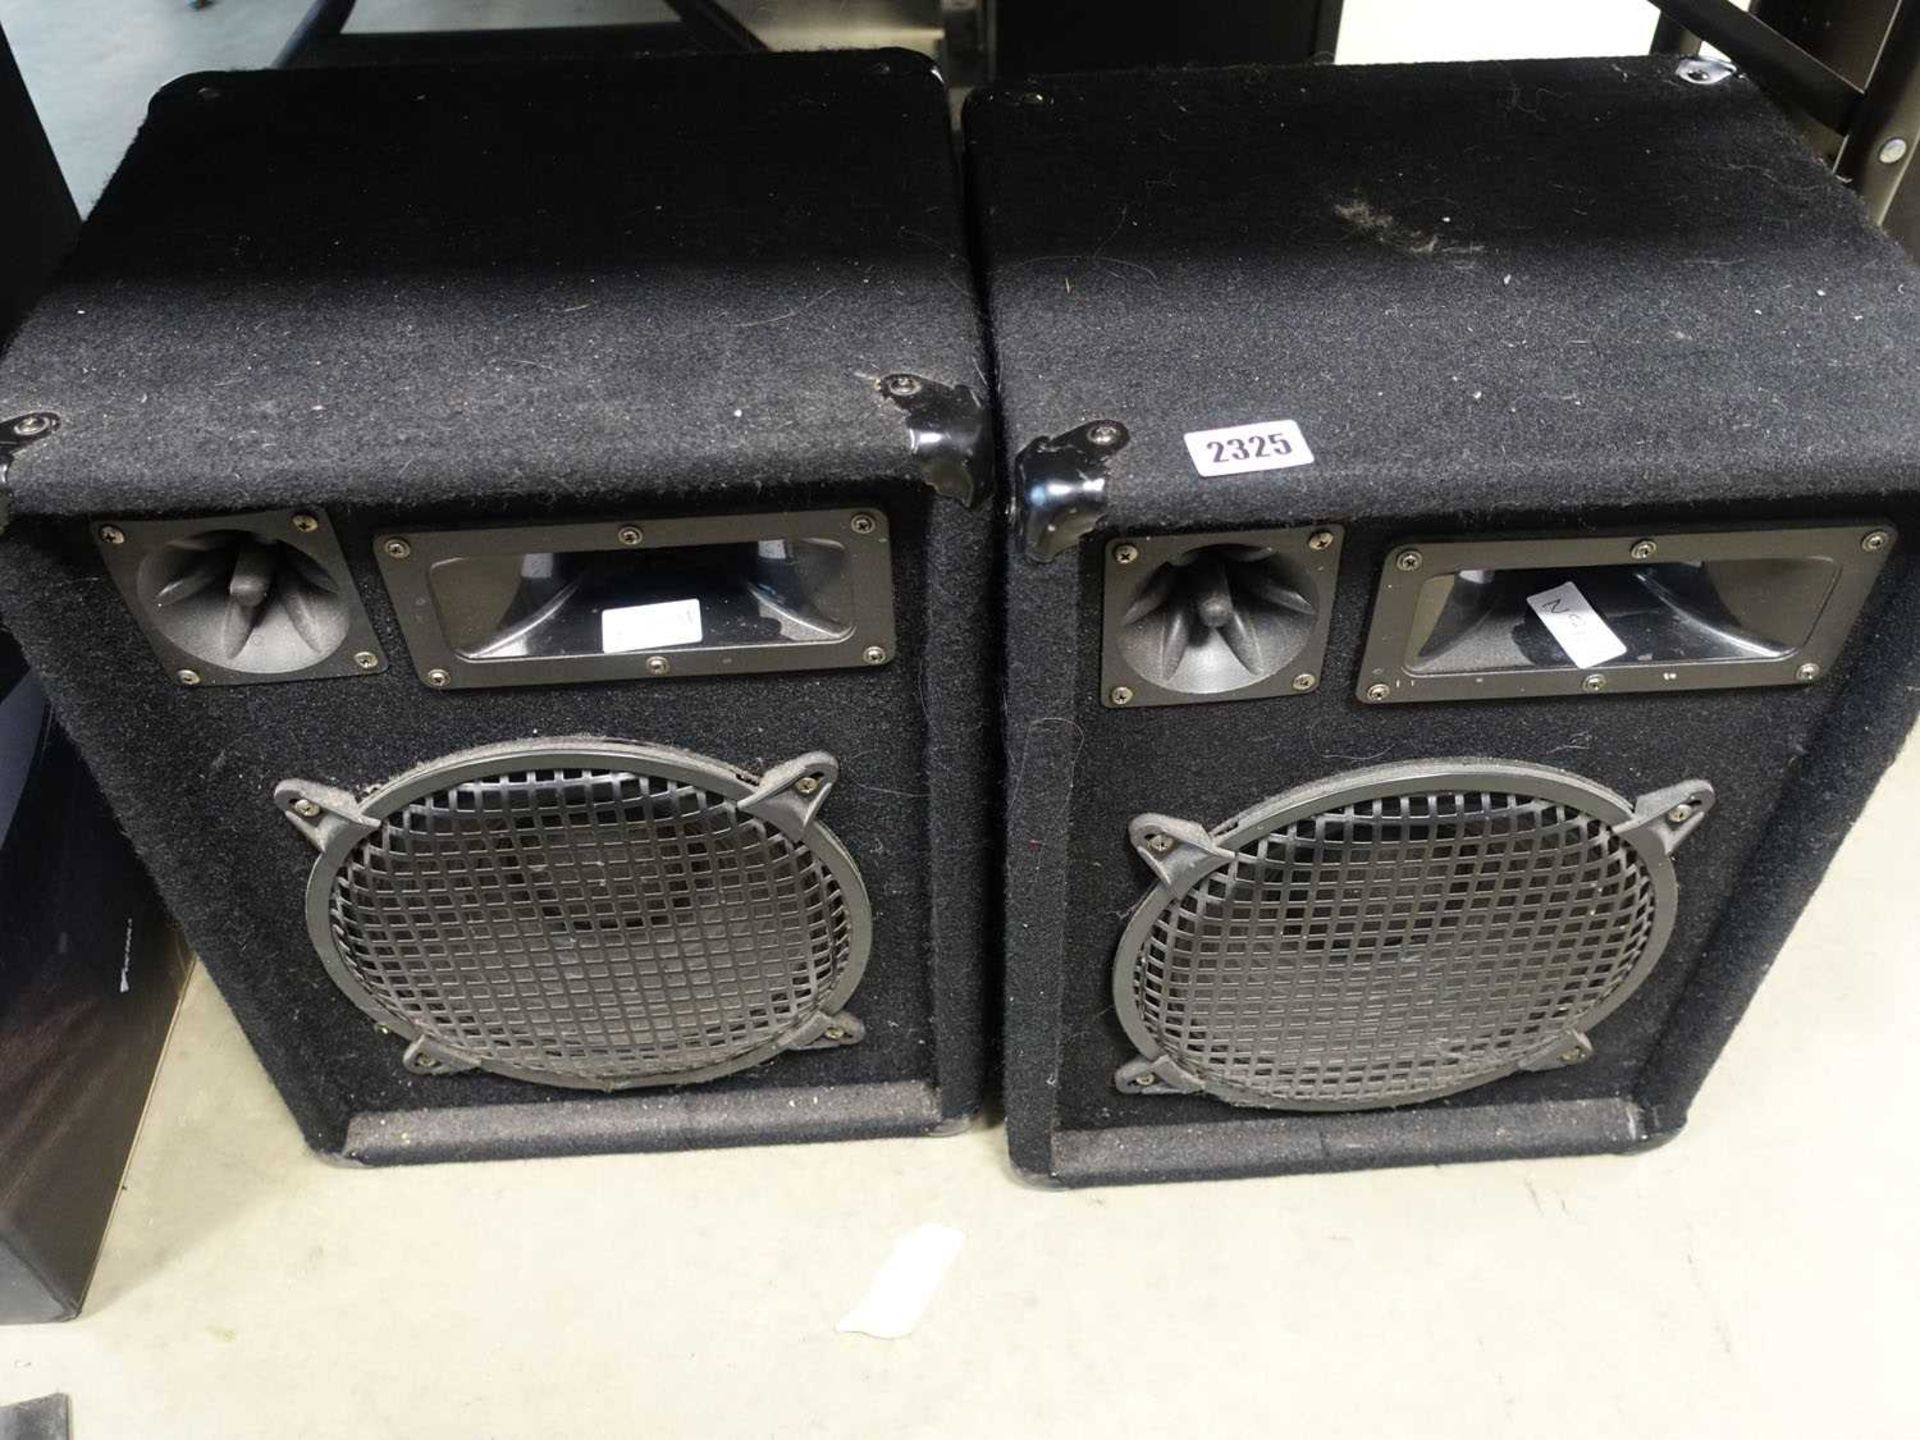 2 sets of felt-covered passive speakers